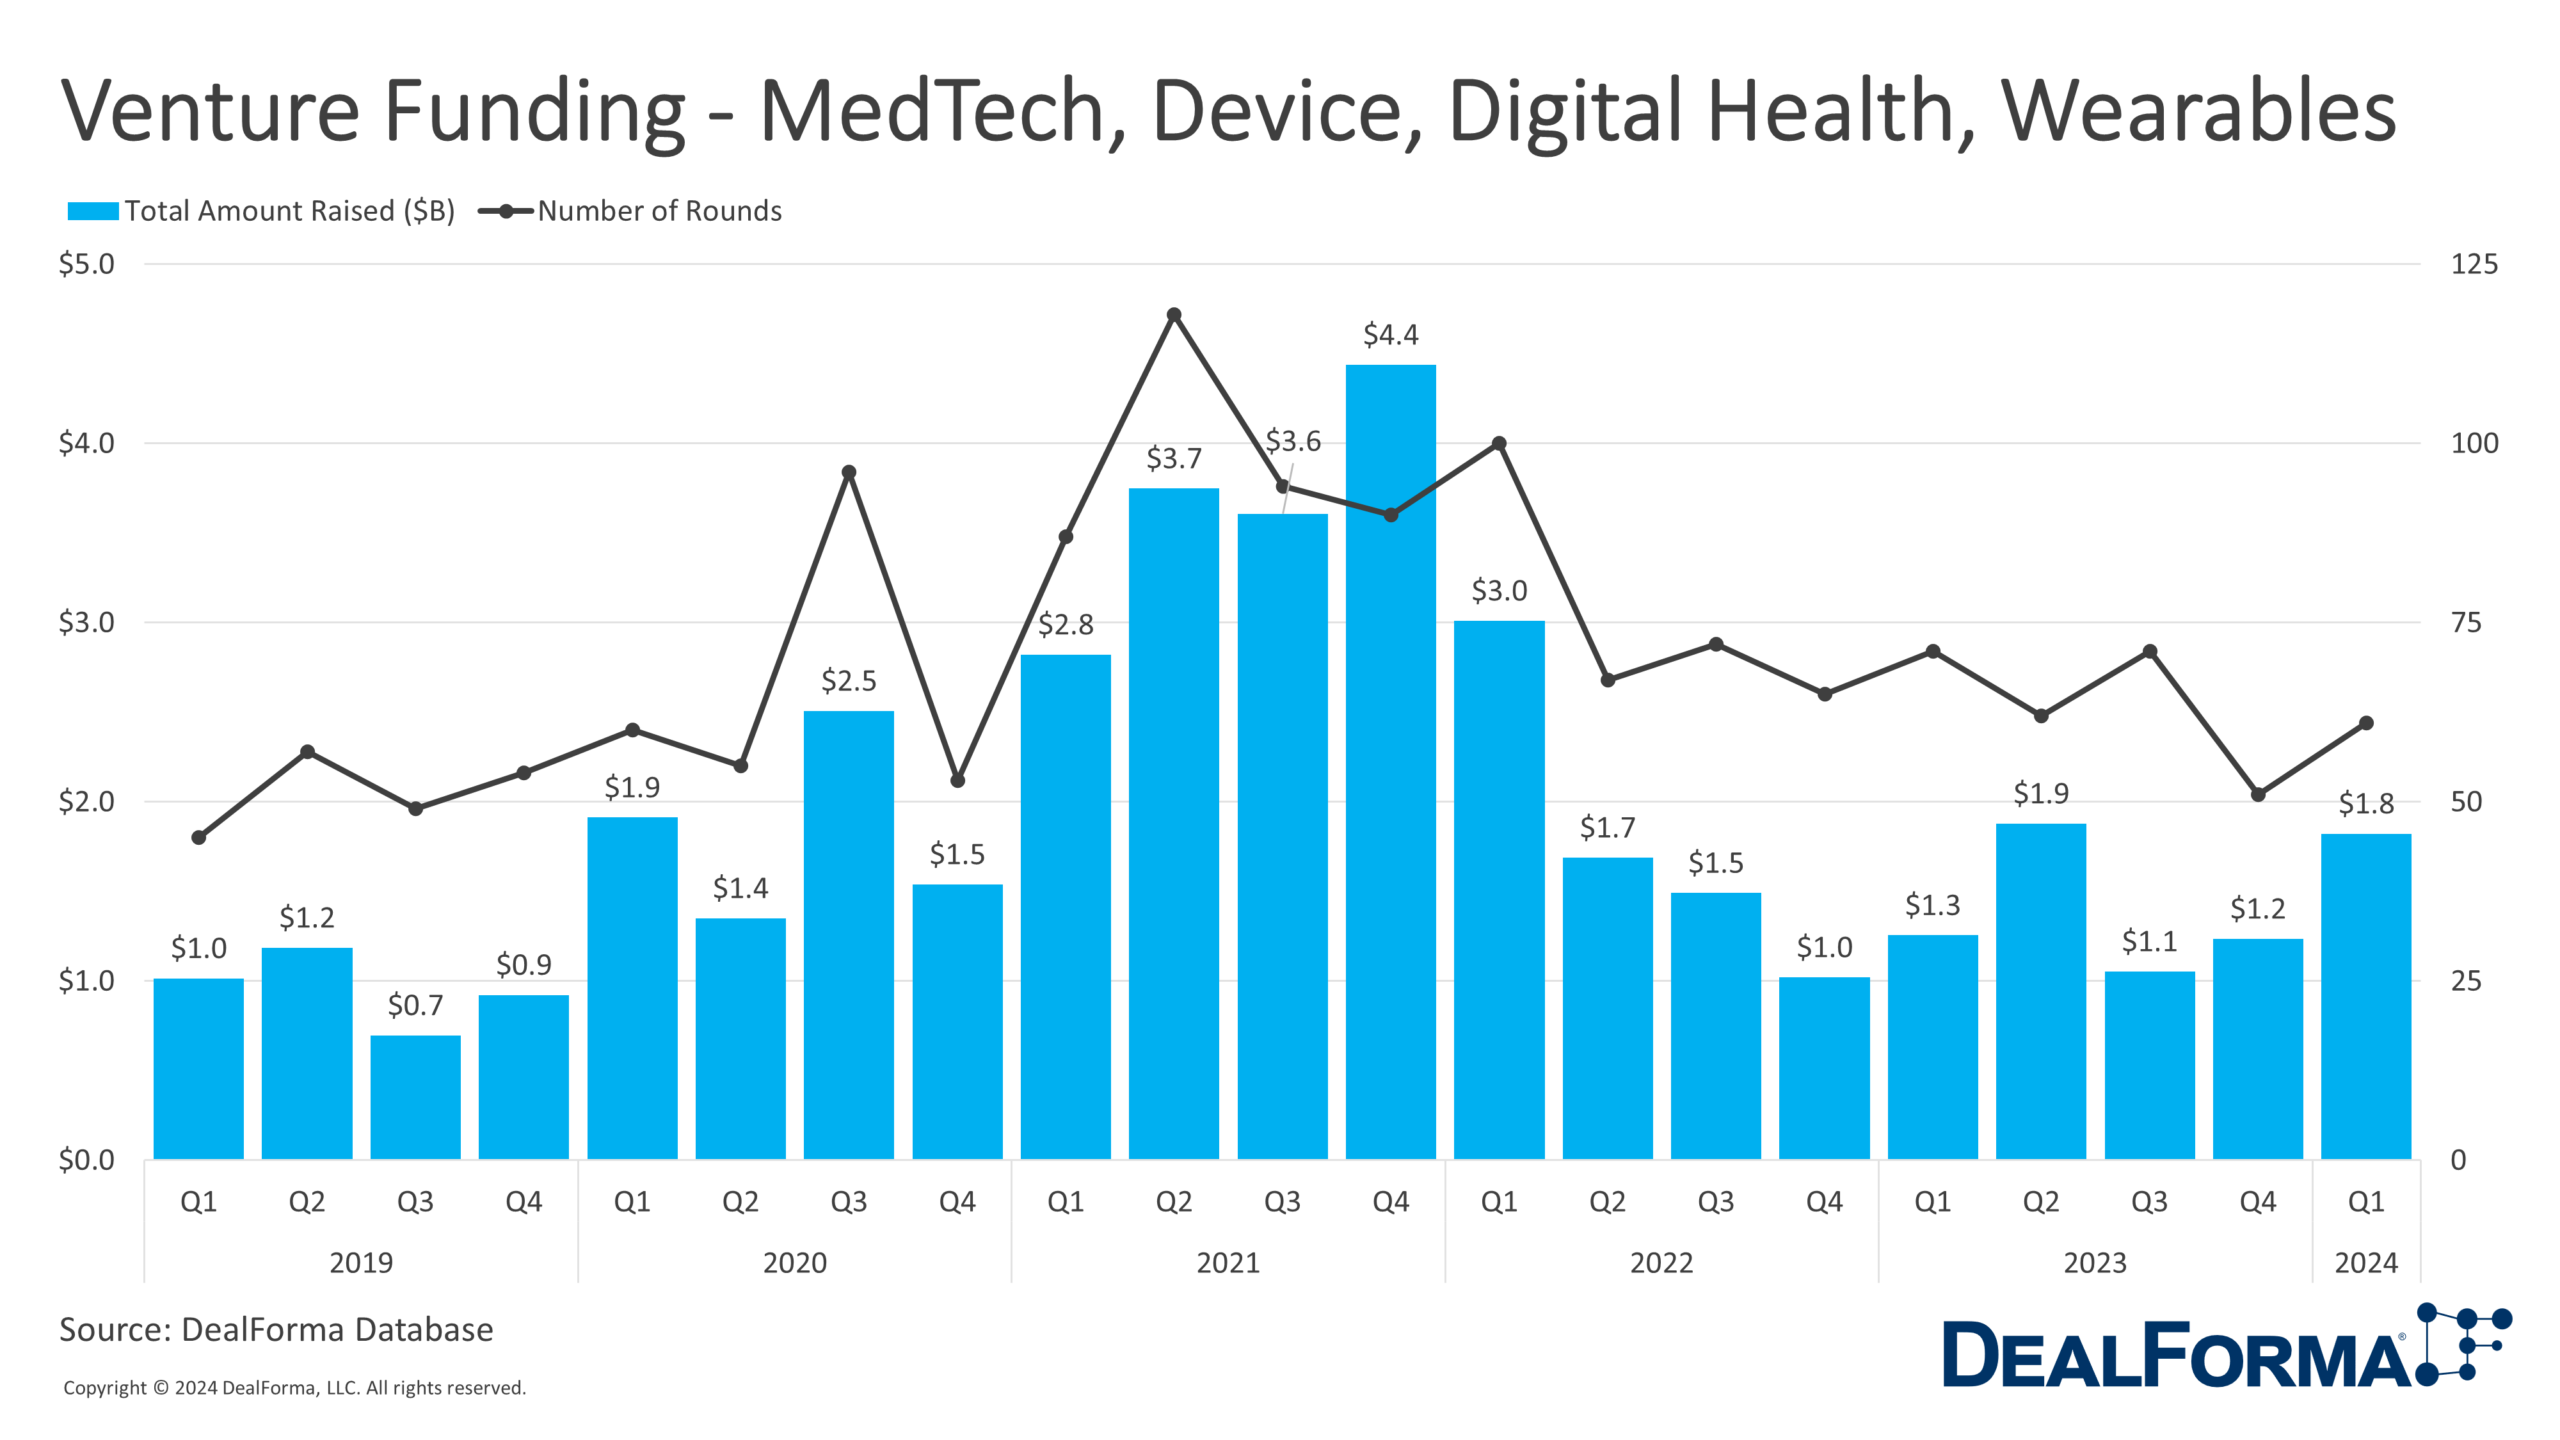 Venture Funding - MedTech, Device, Digital Health, Wearables